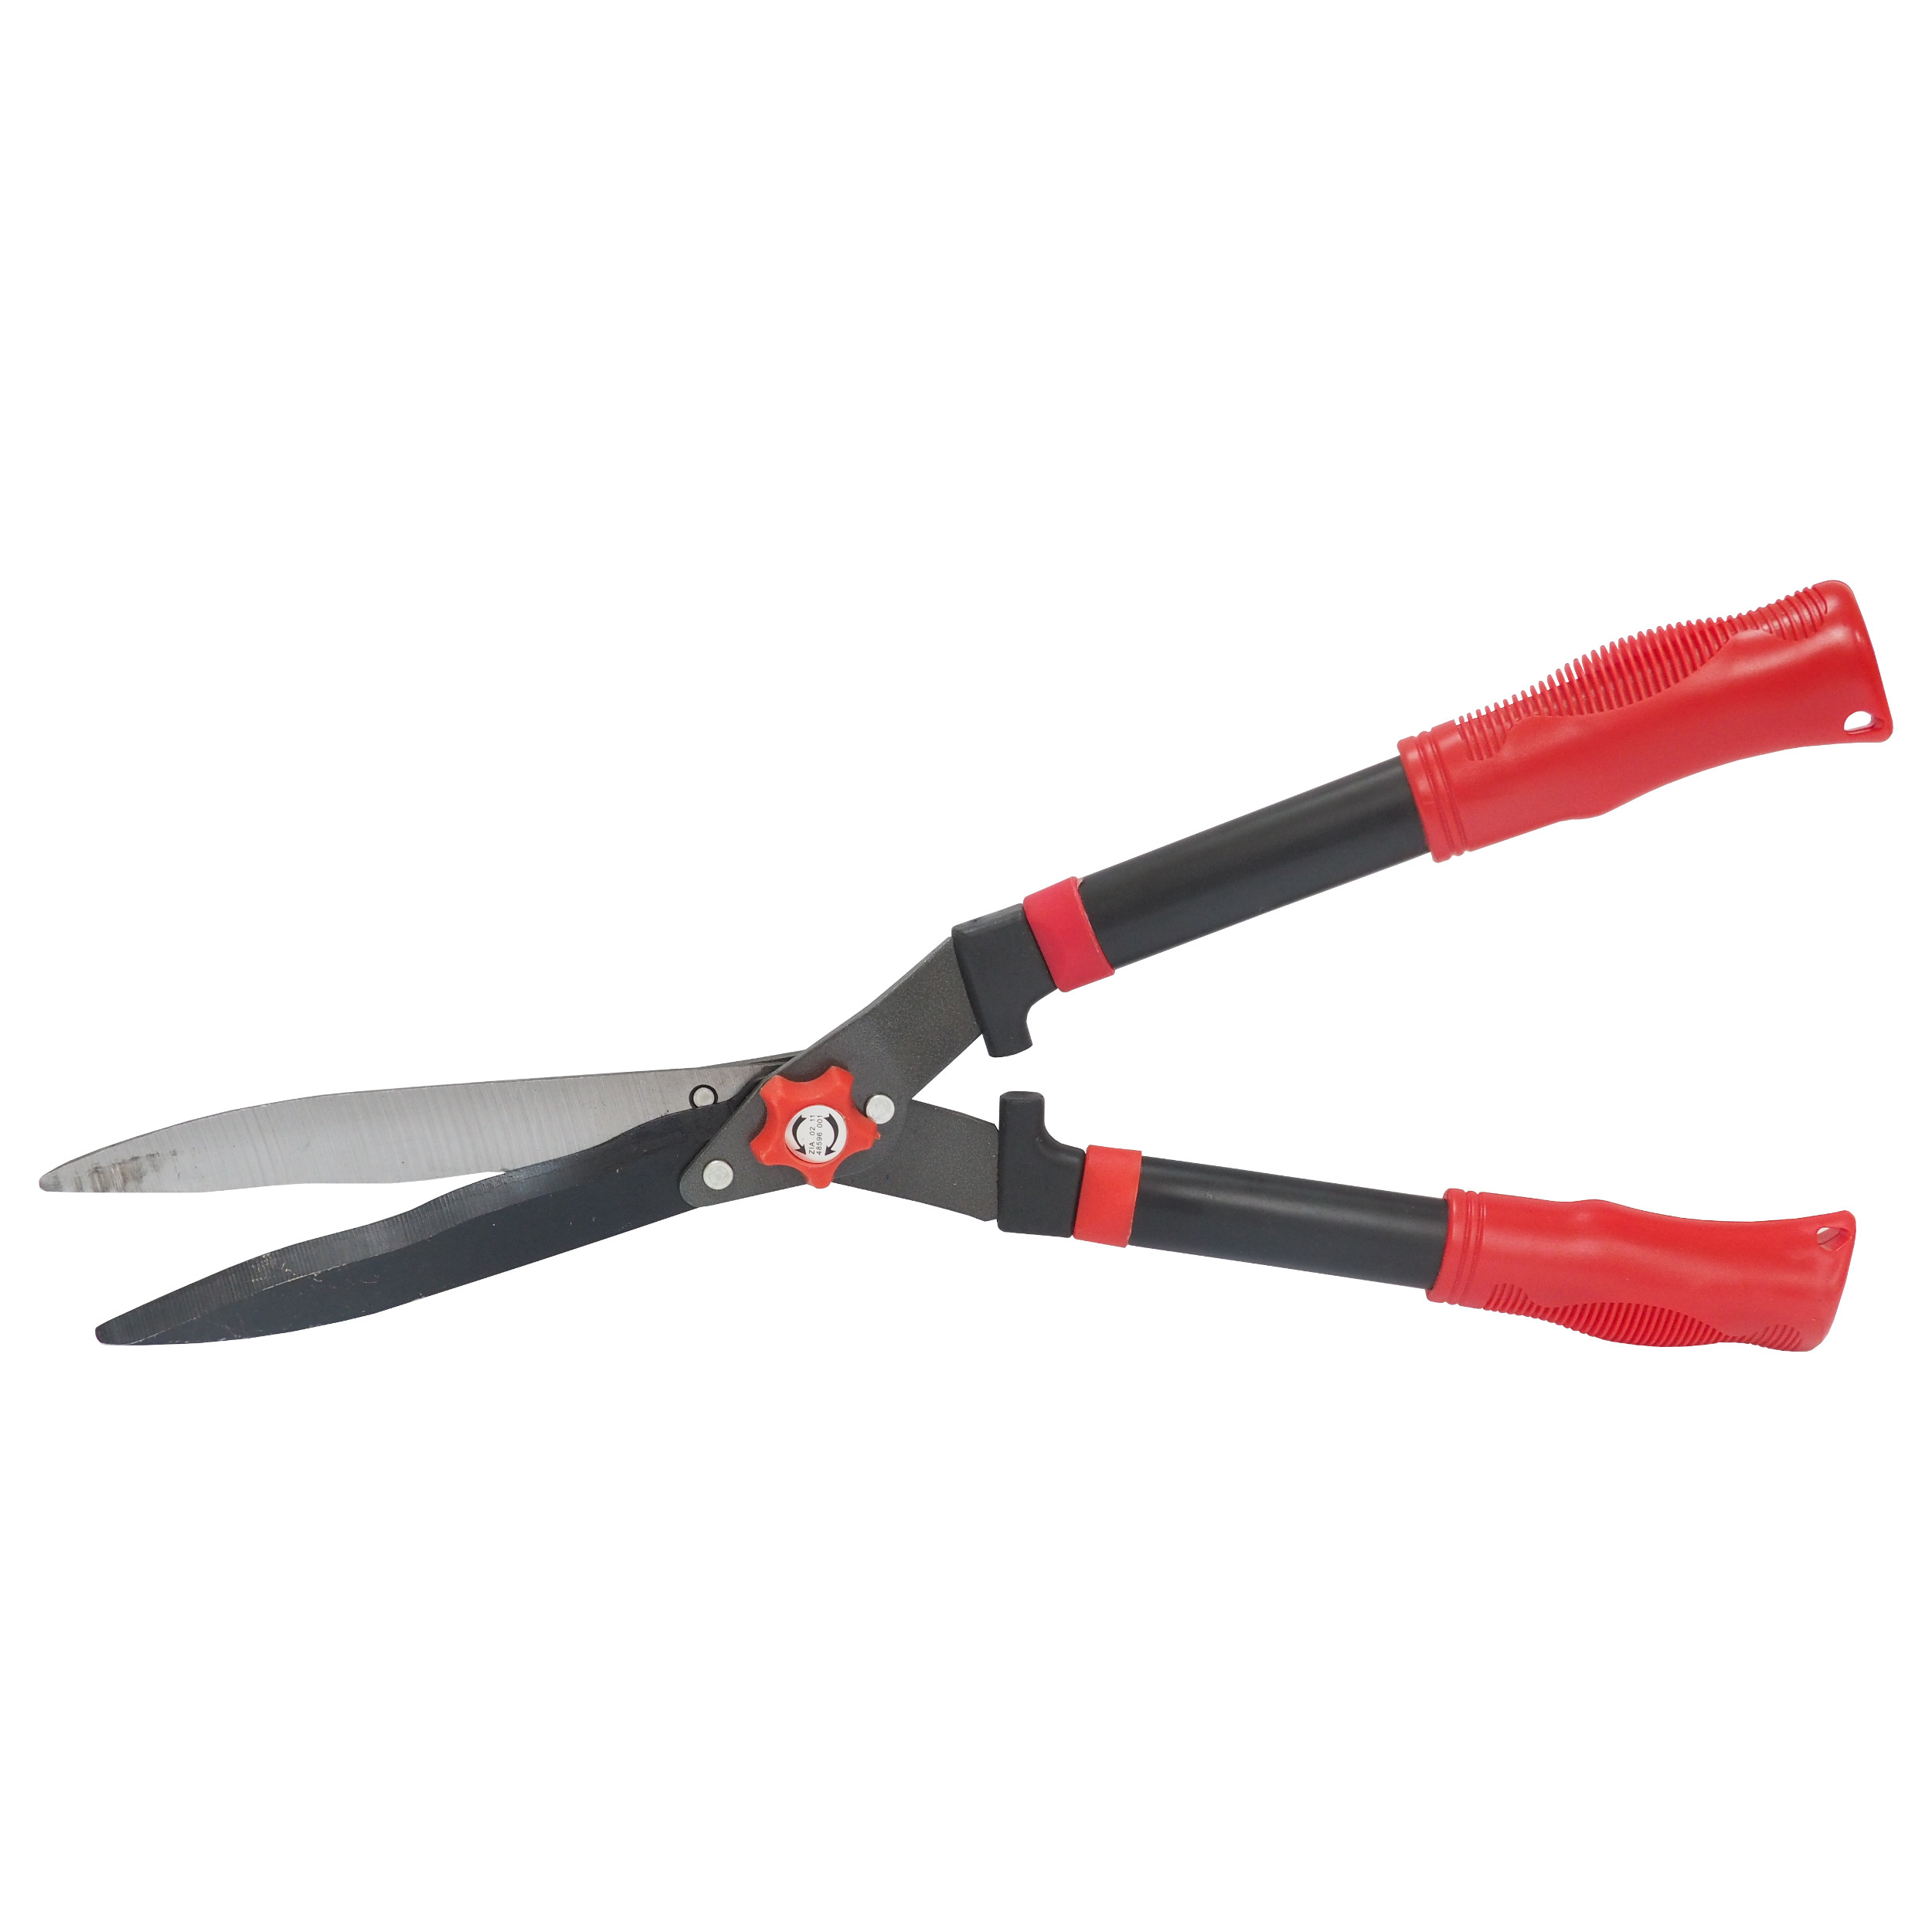 REFLEX nůžky zahradnické, celokovové, na živý plot, 710 mm 1.08 Kg TOP Sklad4 307161 117